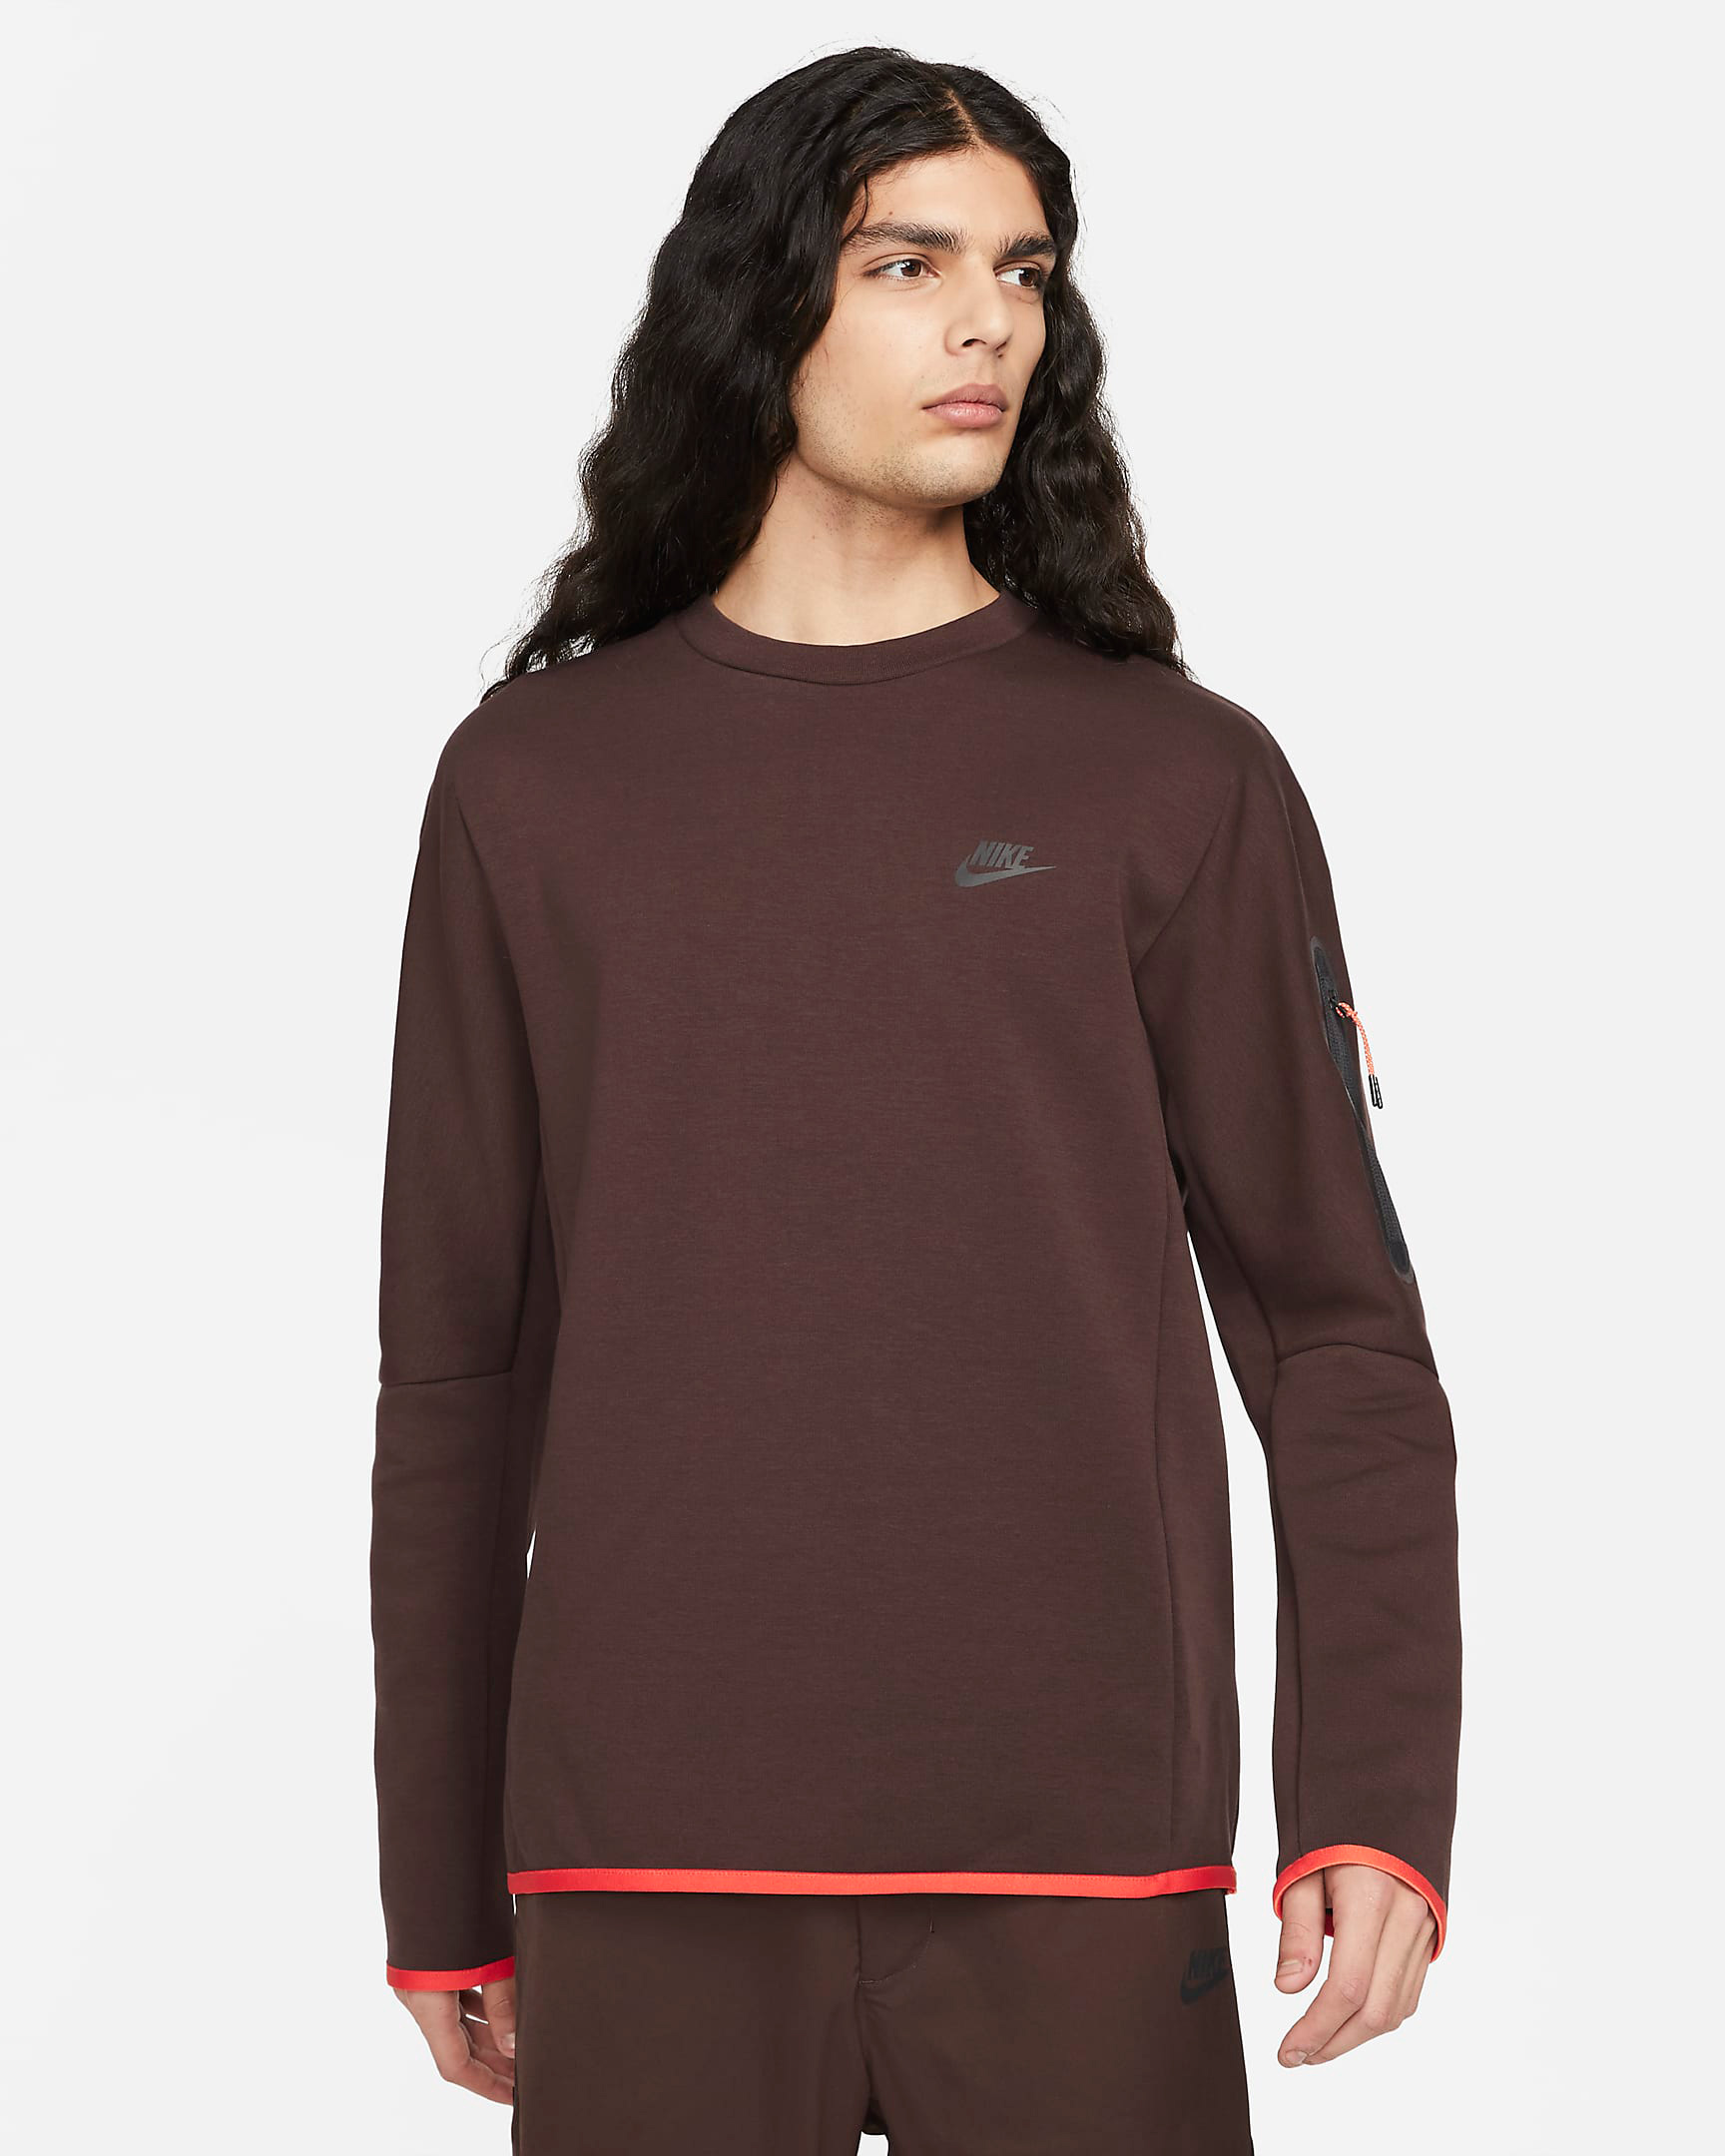 nike-tech-fleece-sweatshirt-brown-basalt-black-chile-red